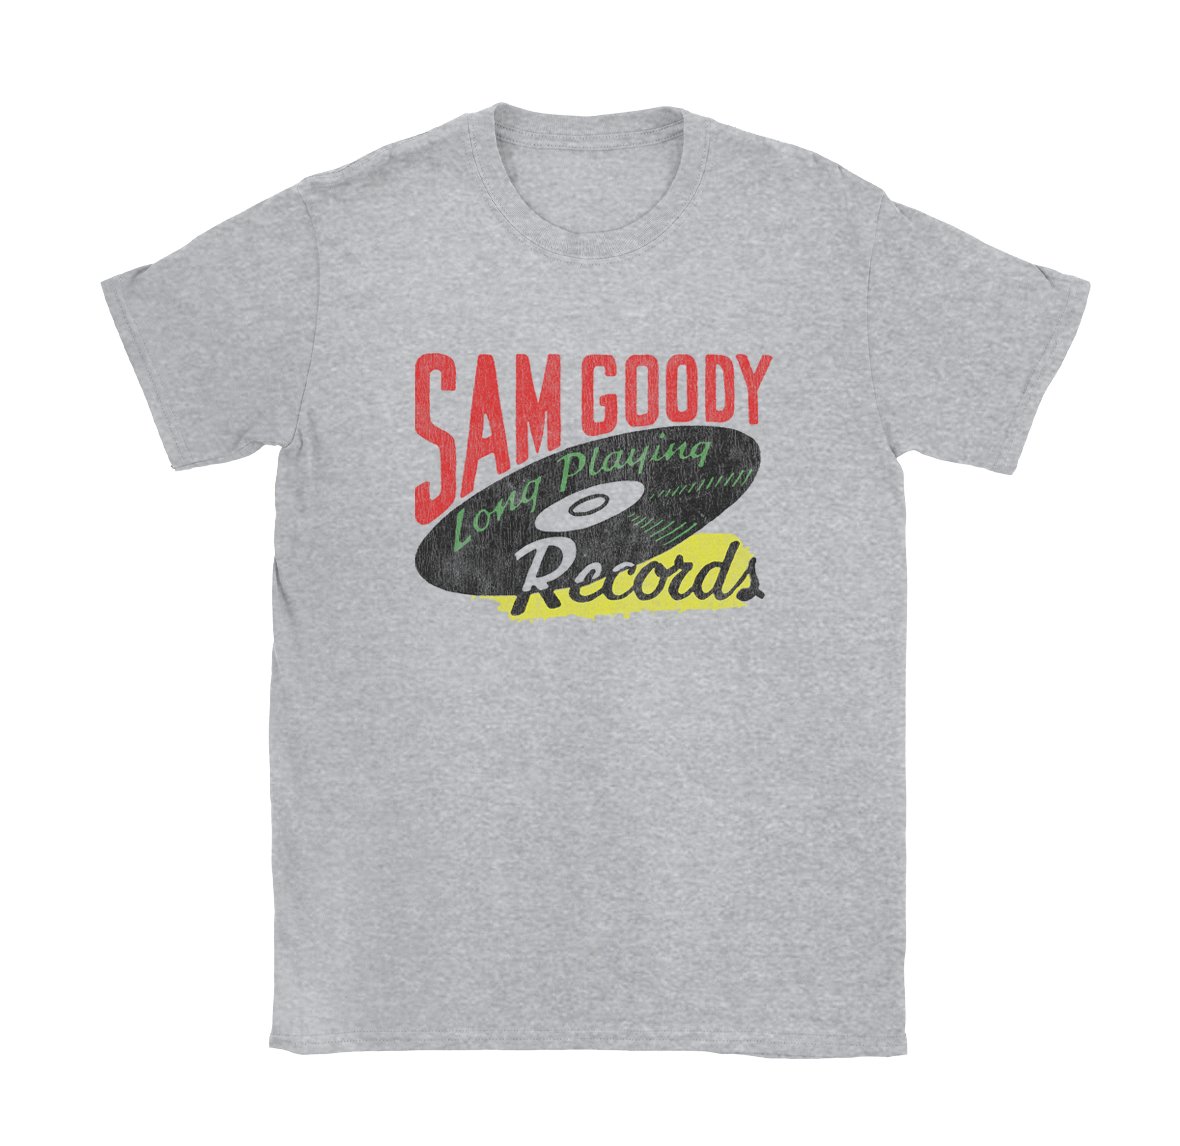 Sam Goody Long Playing Records - Black Cat MFG - T-Shirt